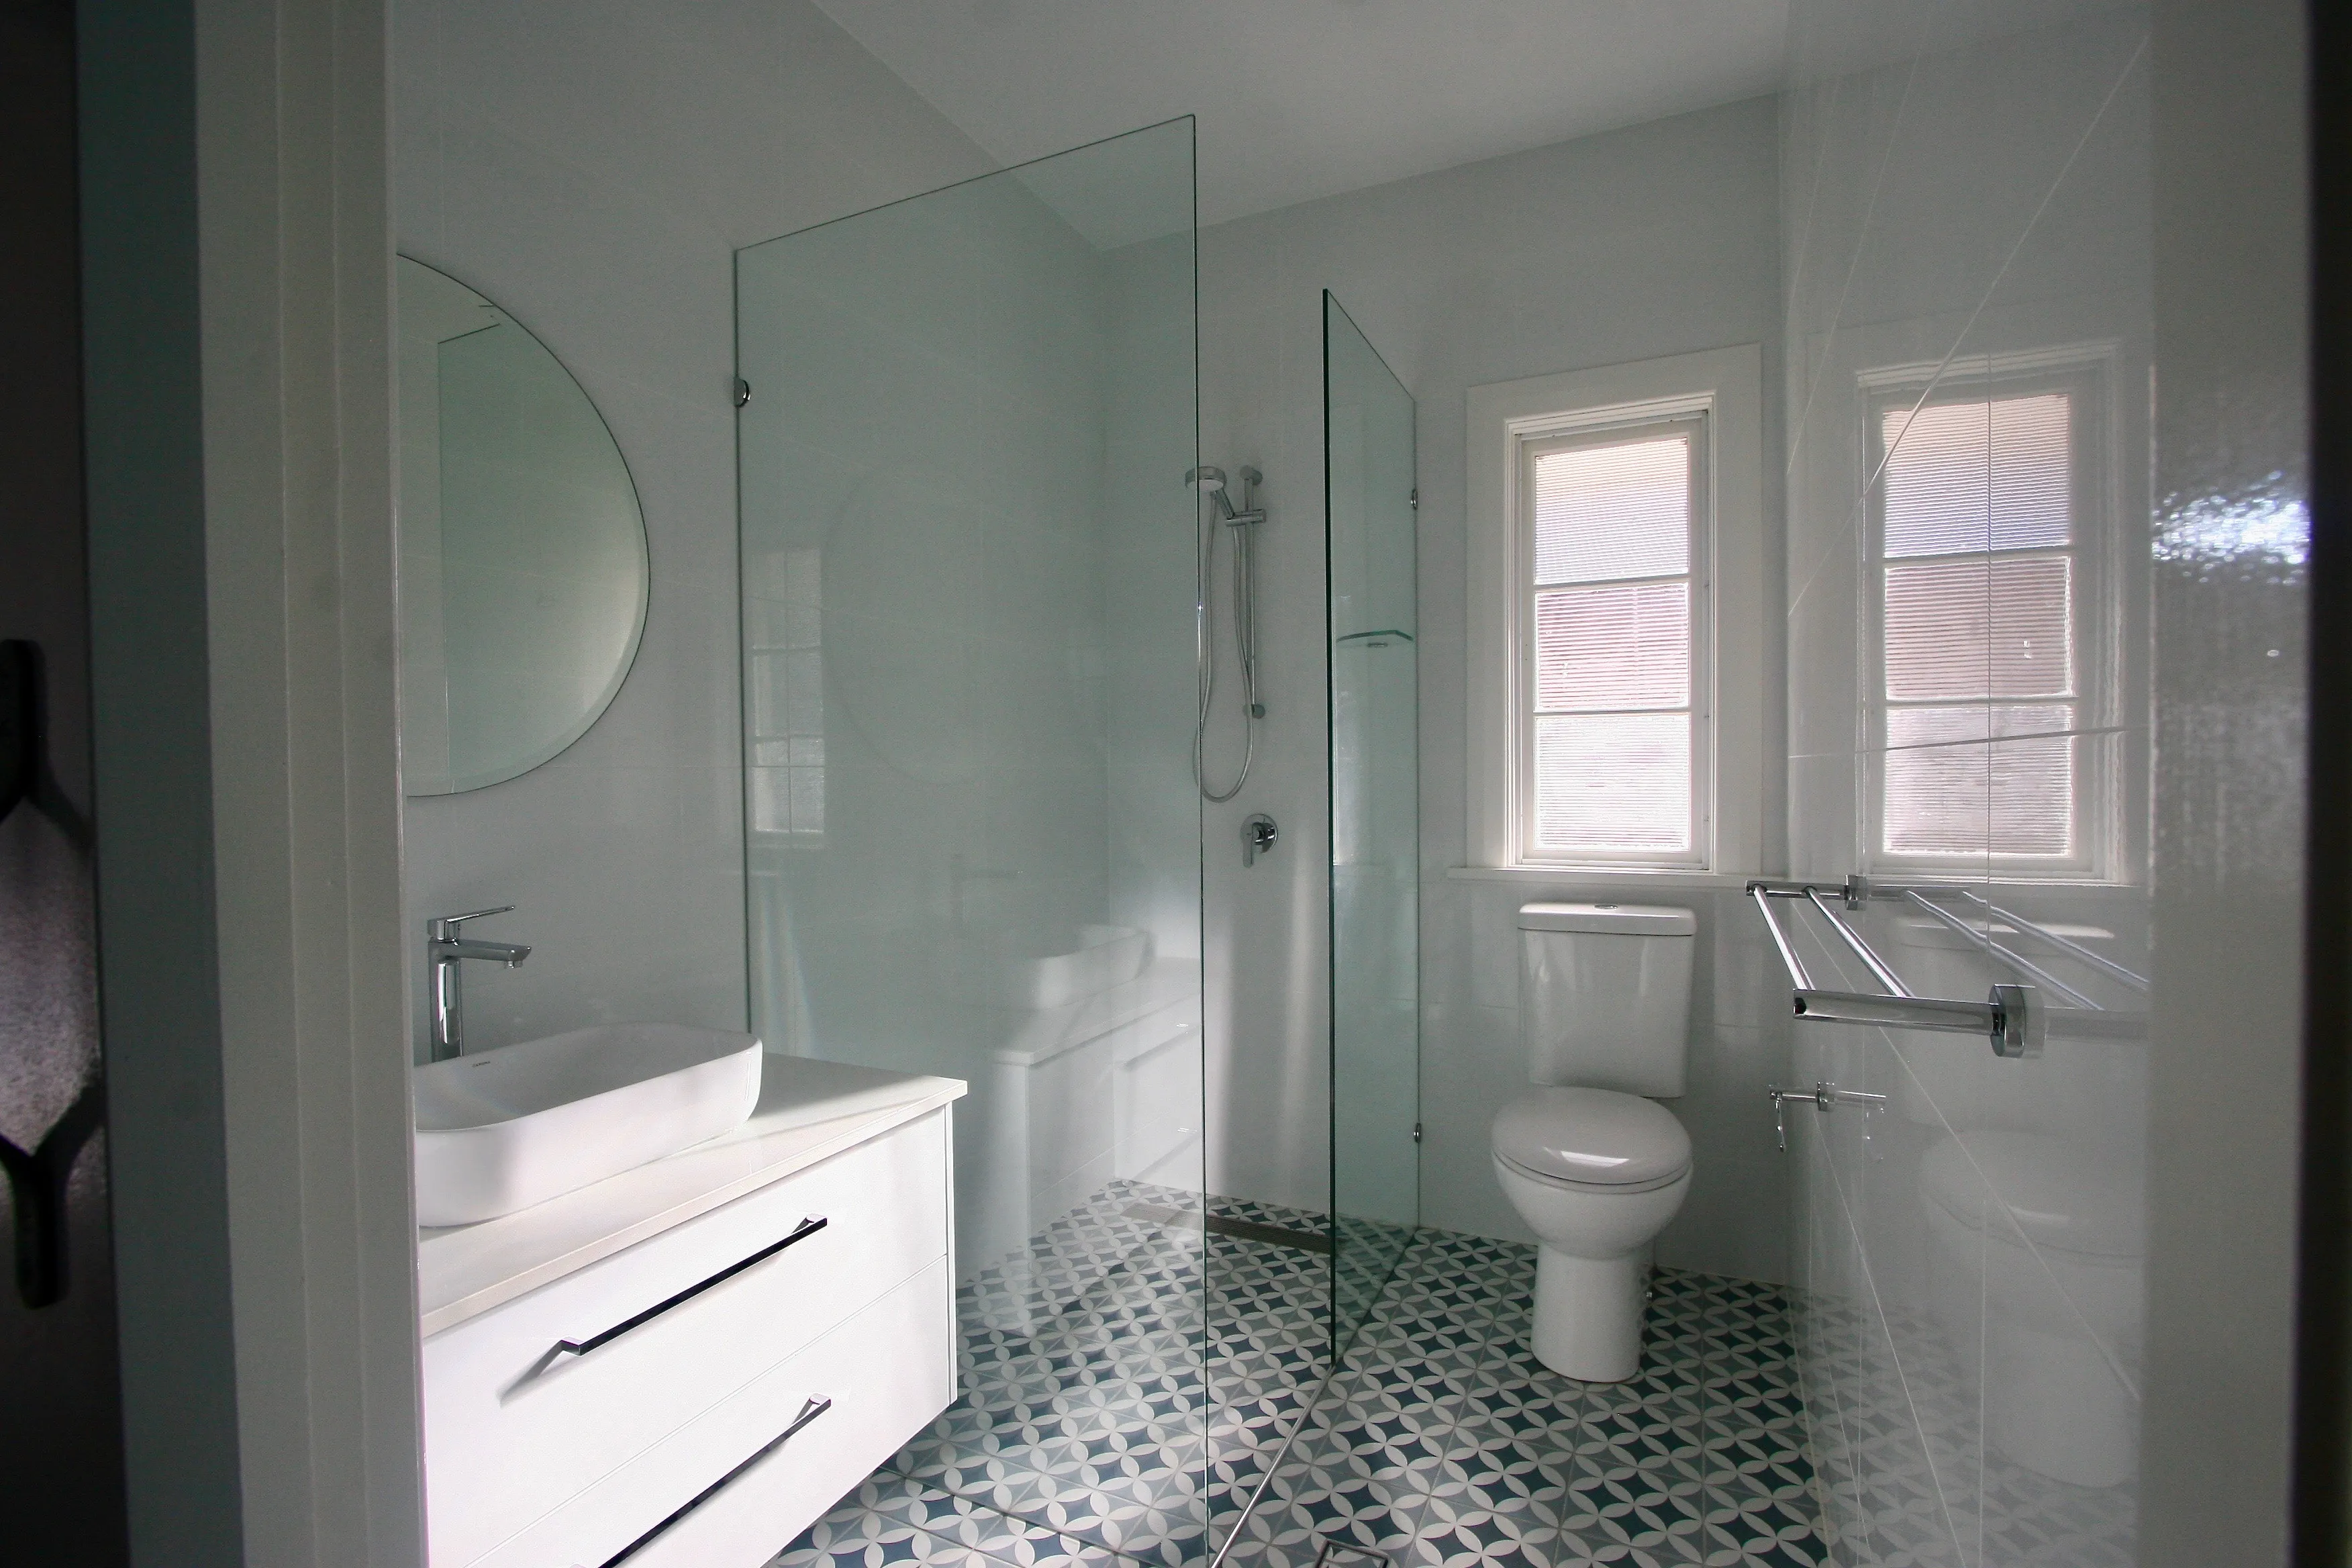 Frameless shower screen and blue and white tiles in bathroom